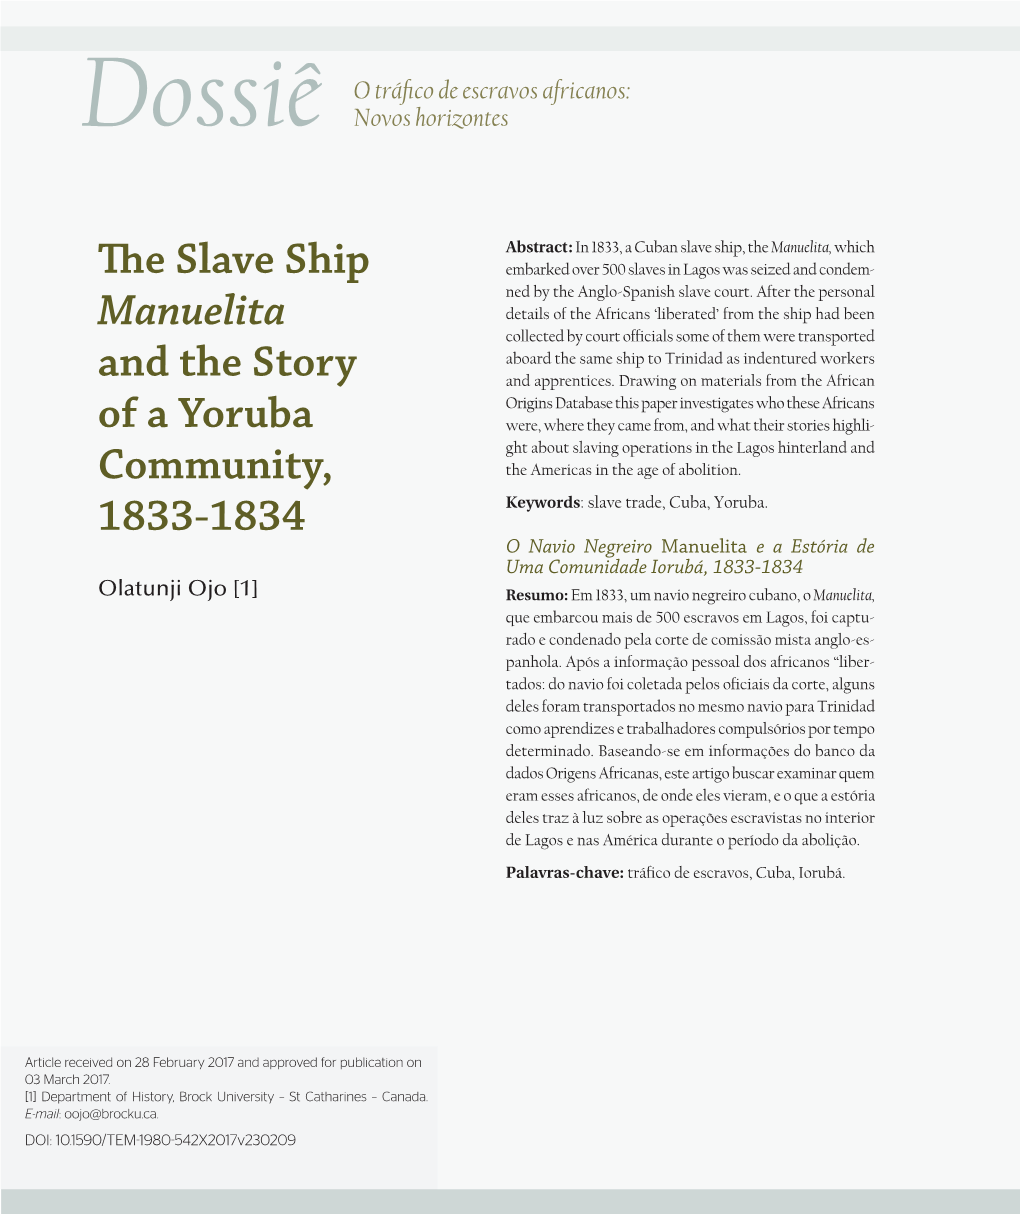 The Slave Ship Manuelita and the Story of a Yoruba